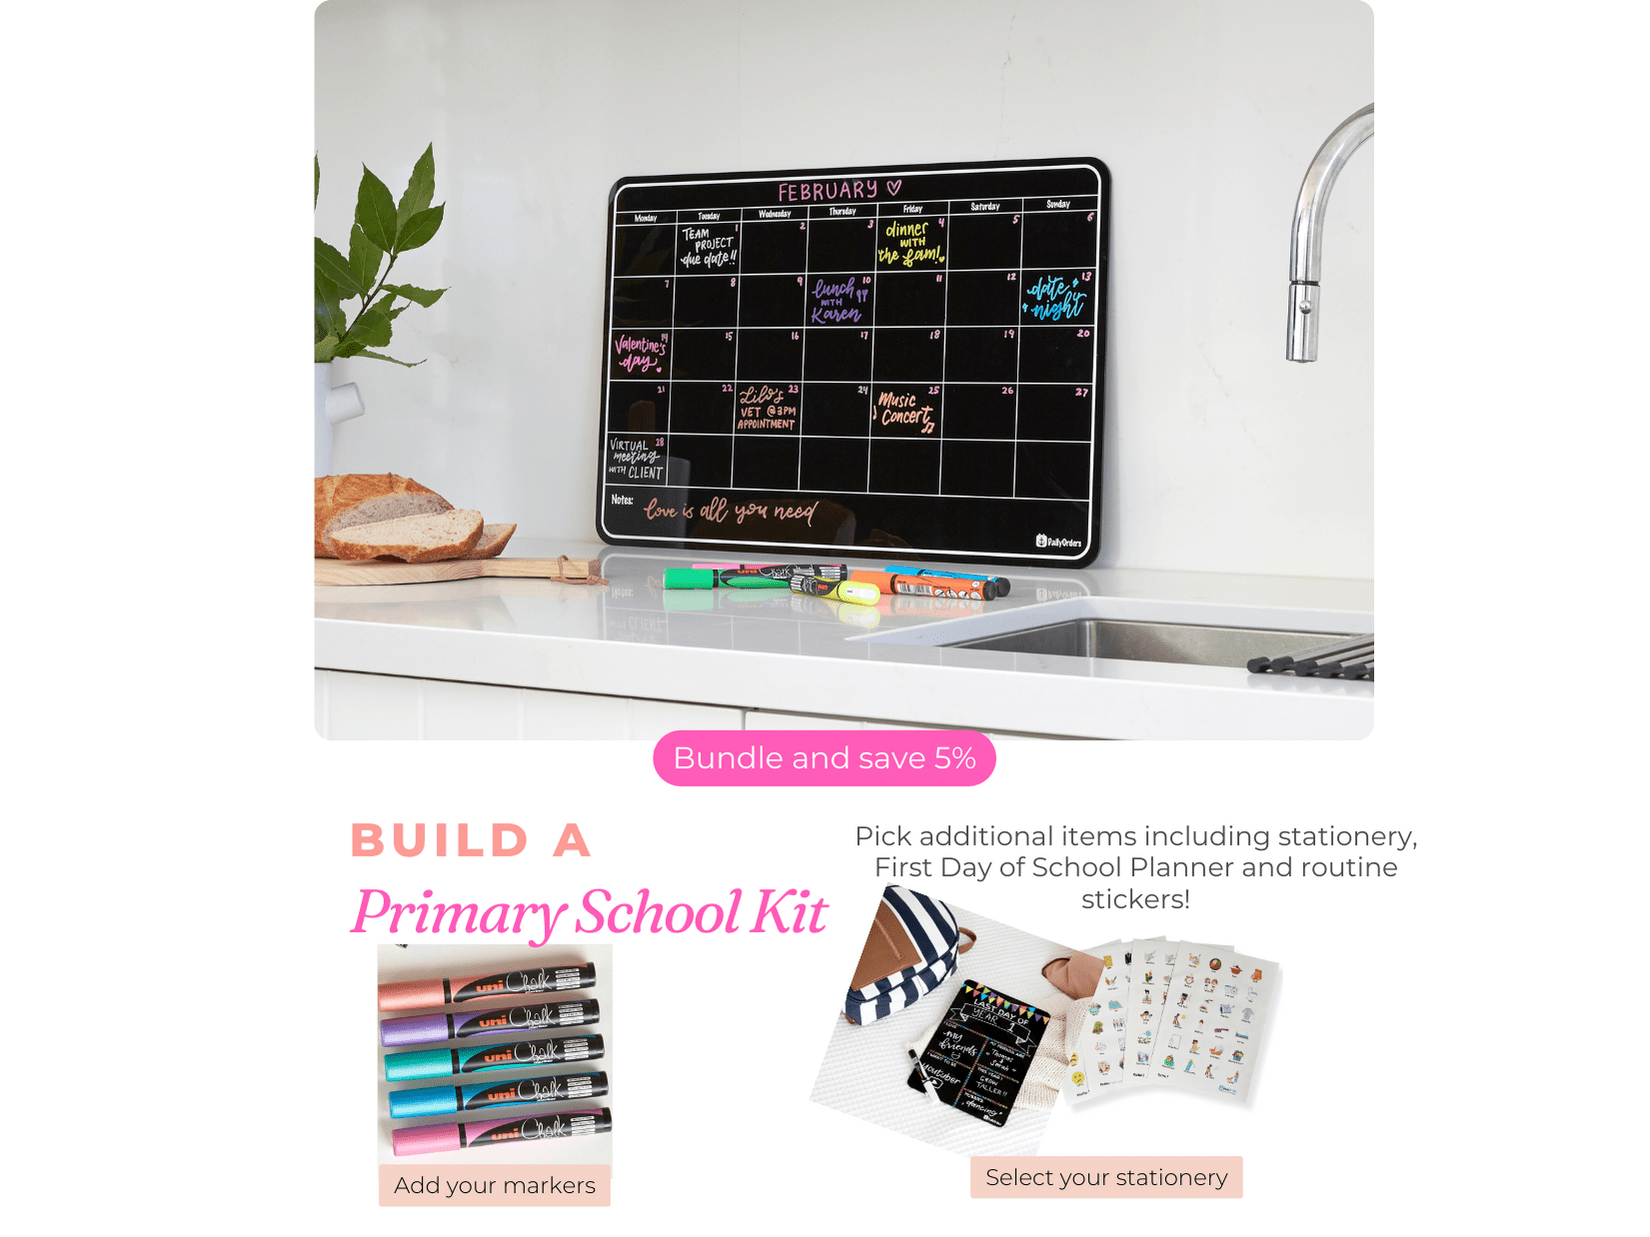 BYOB BYOB default name / default items Build Your Own Primary School Kit